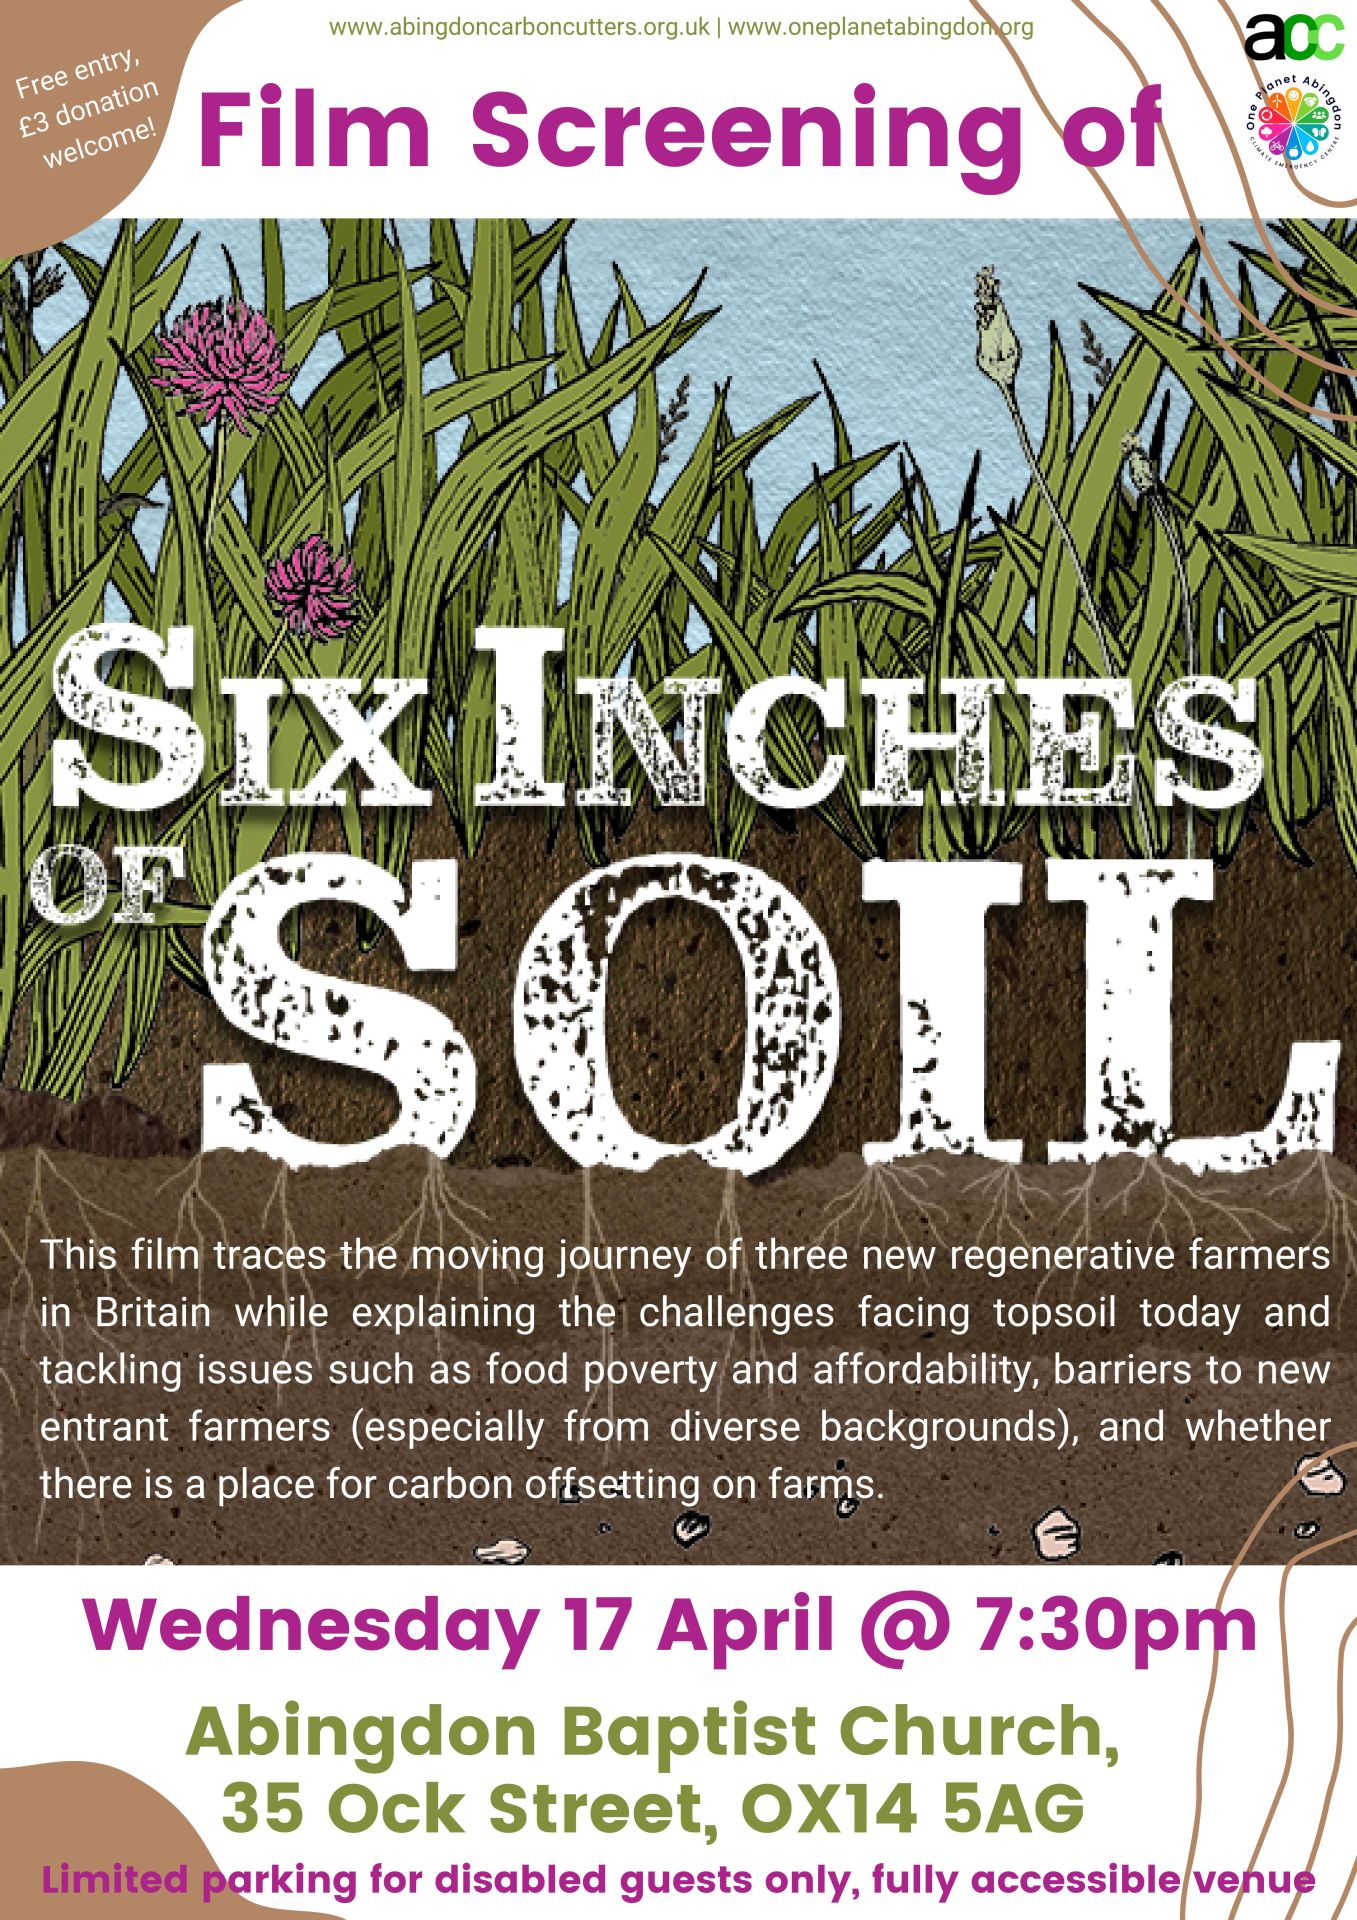 Film screening of 'Six Inches of Soil' @ Abingdon Baptist Church